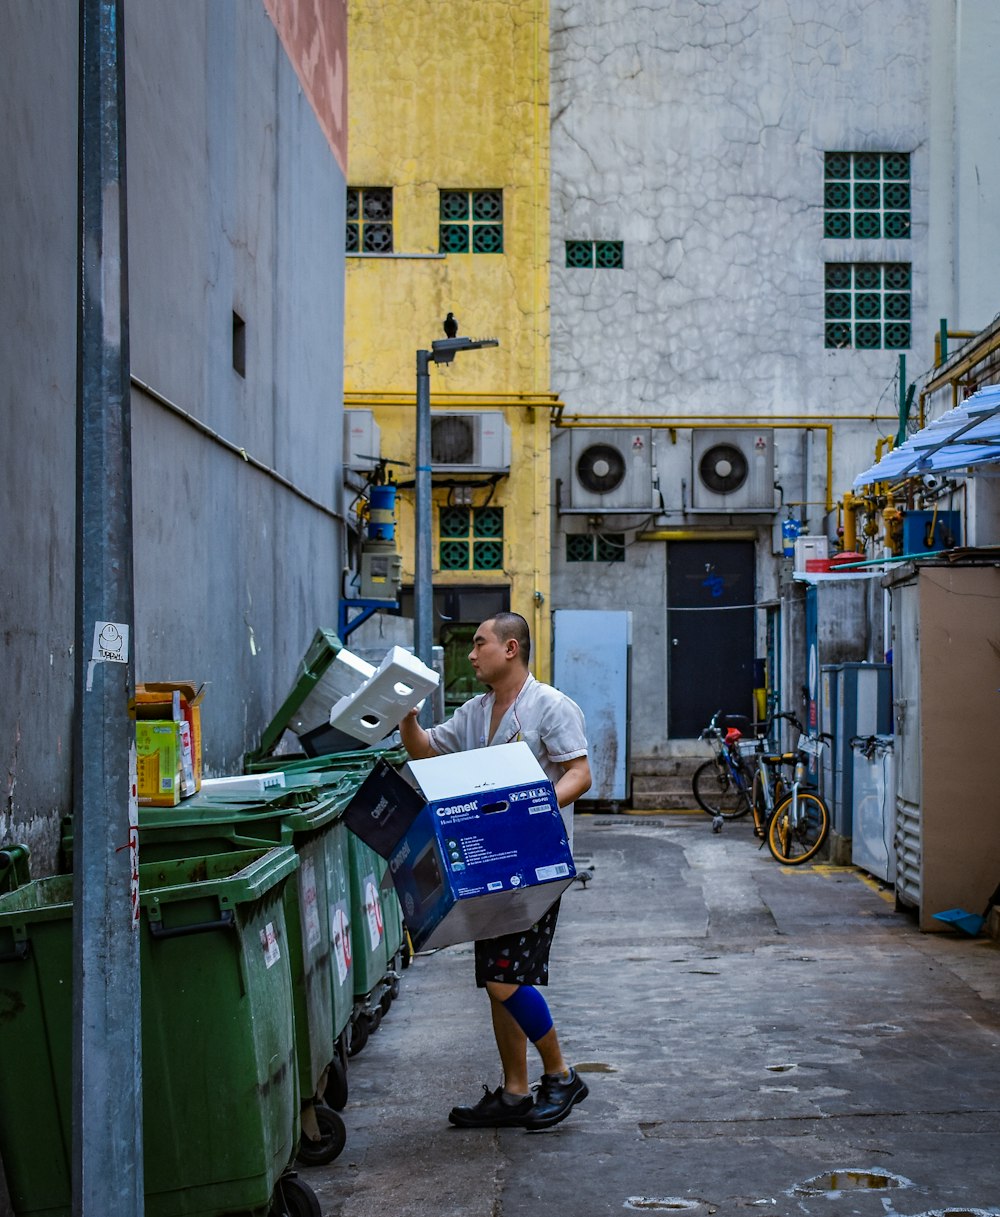 man in gray button-up shirt holding blue box near green garbage bin